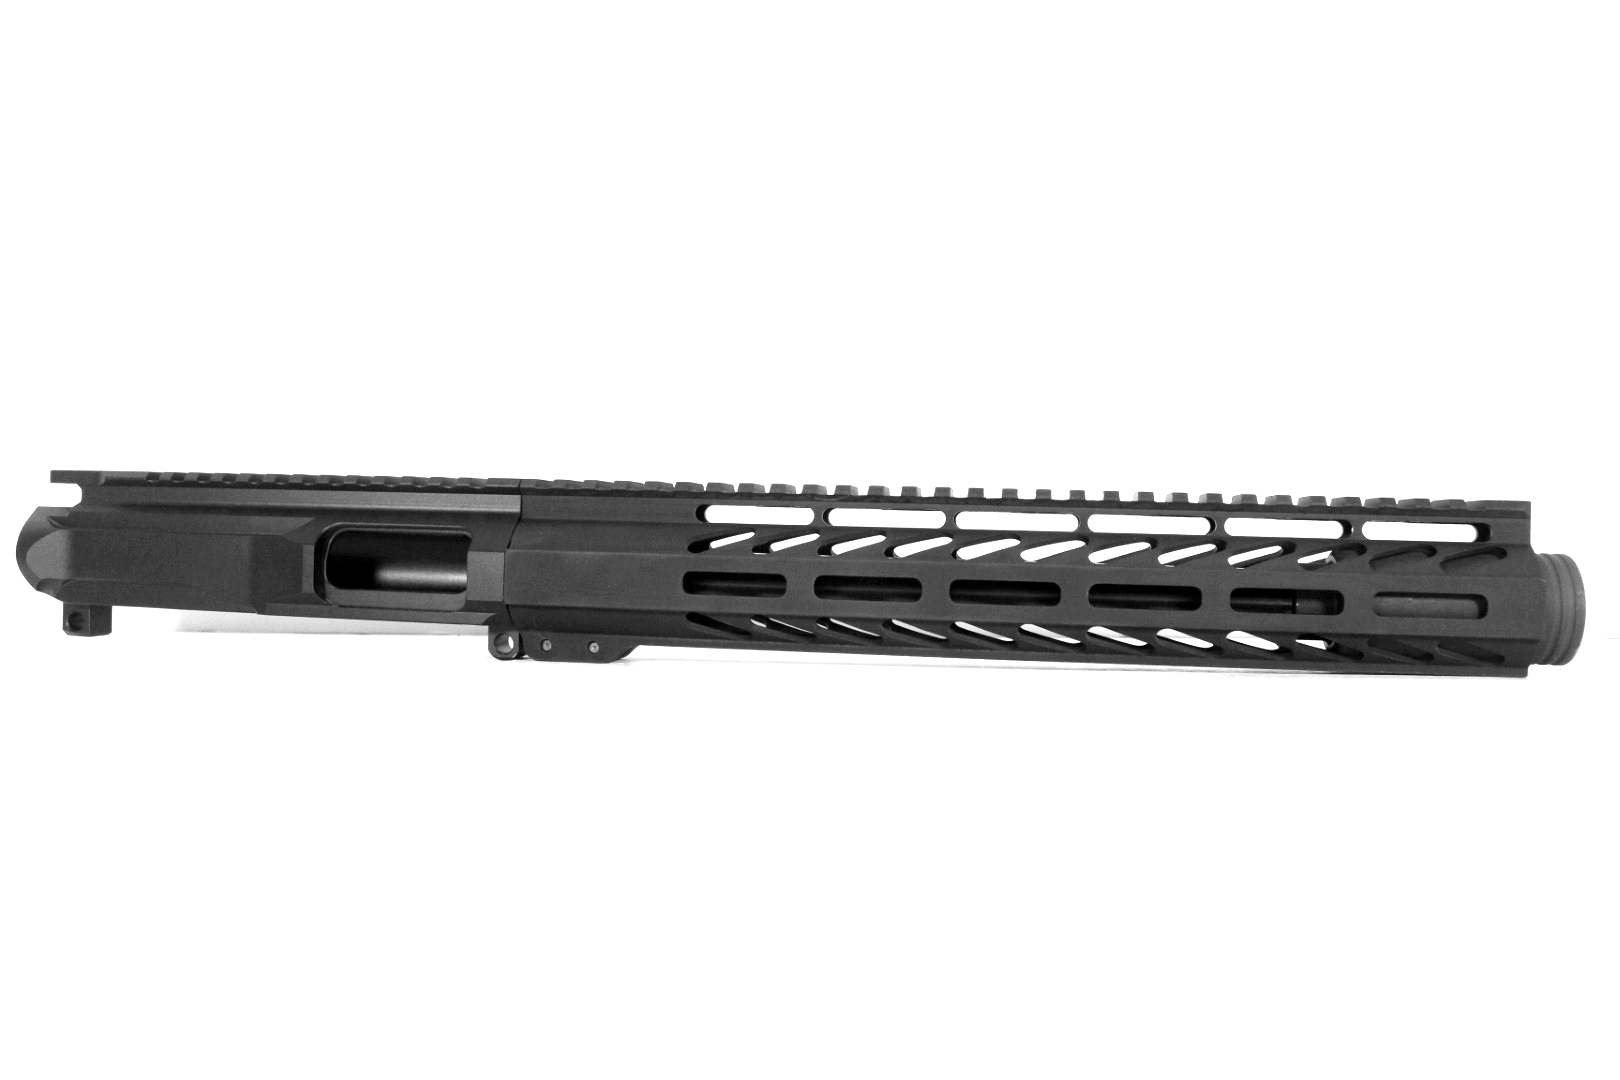 10.5 inch AR-15 40 S&W Pistol Caliber Melonite Upper w/CAN